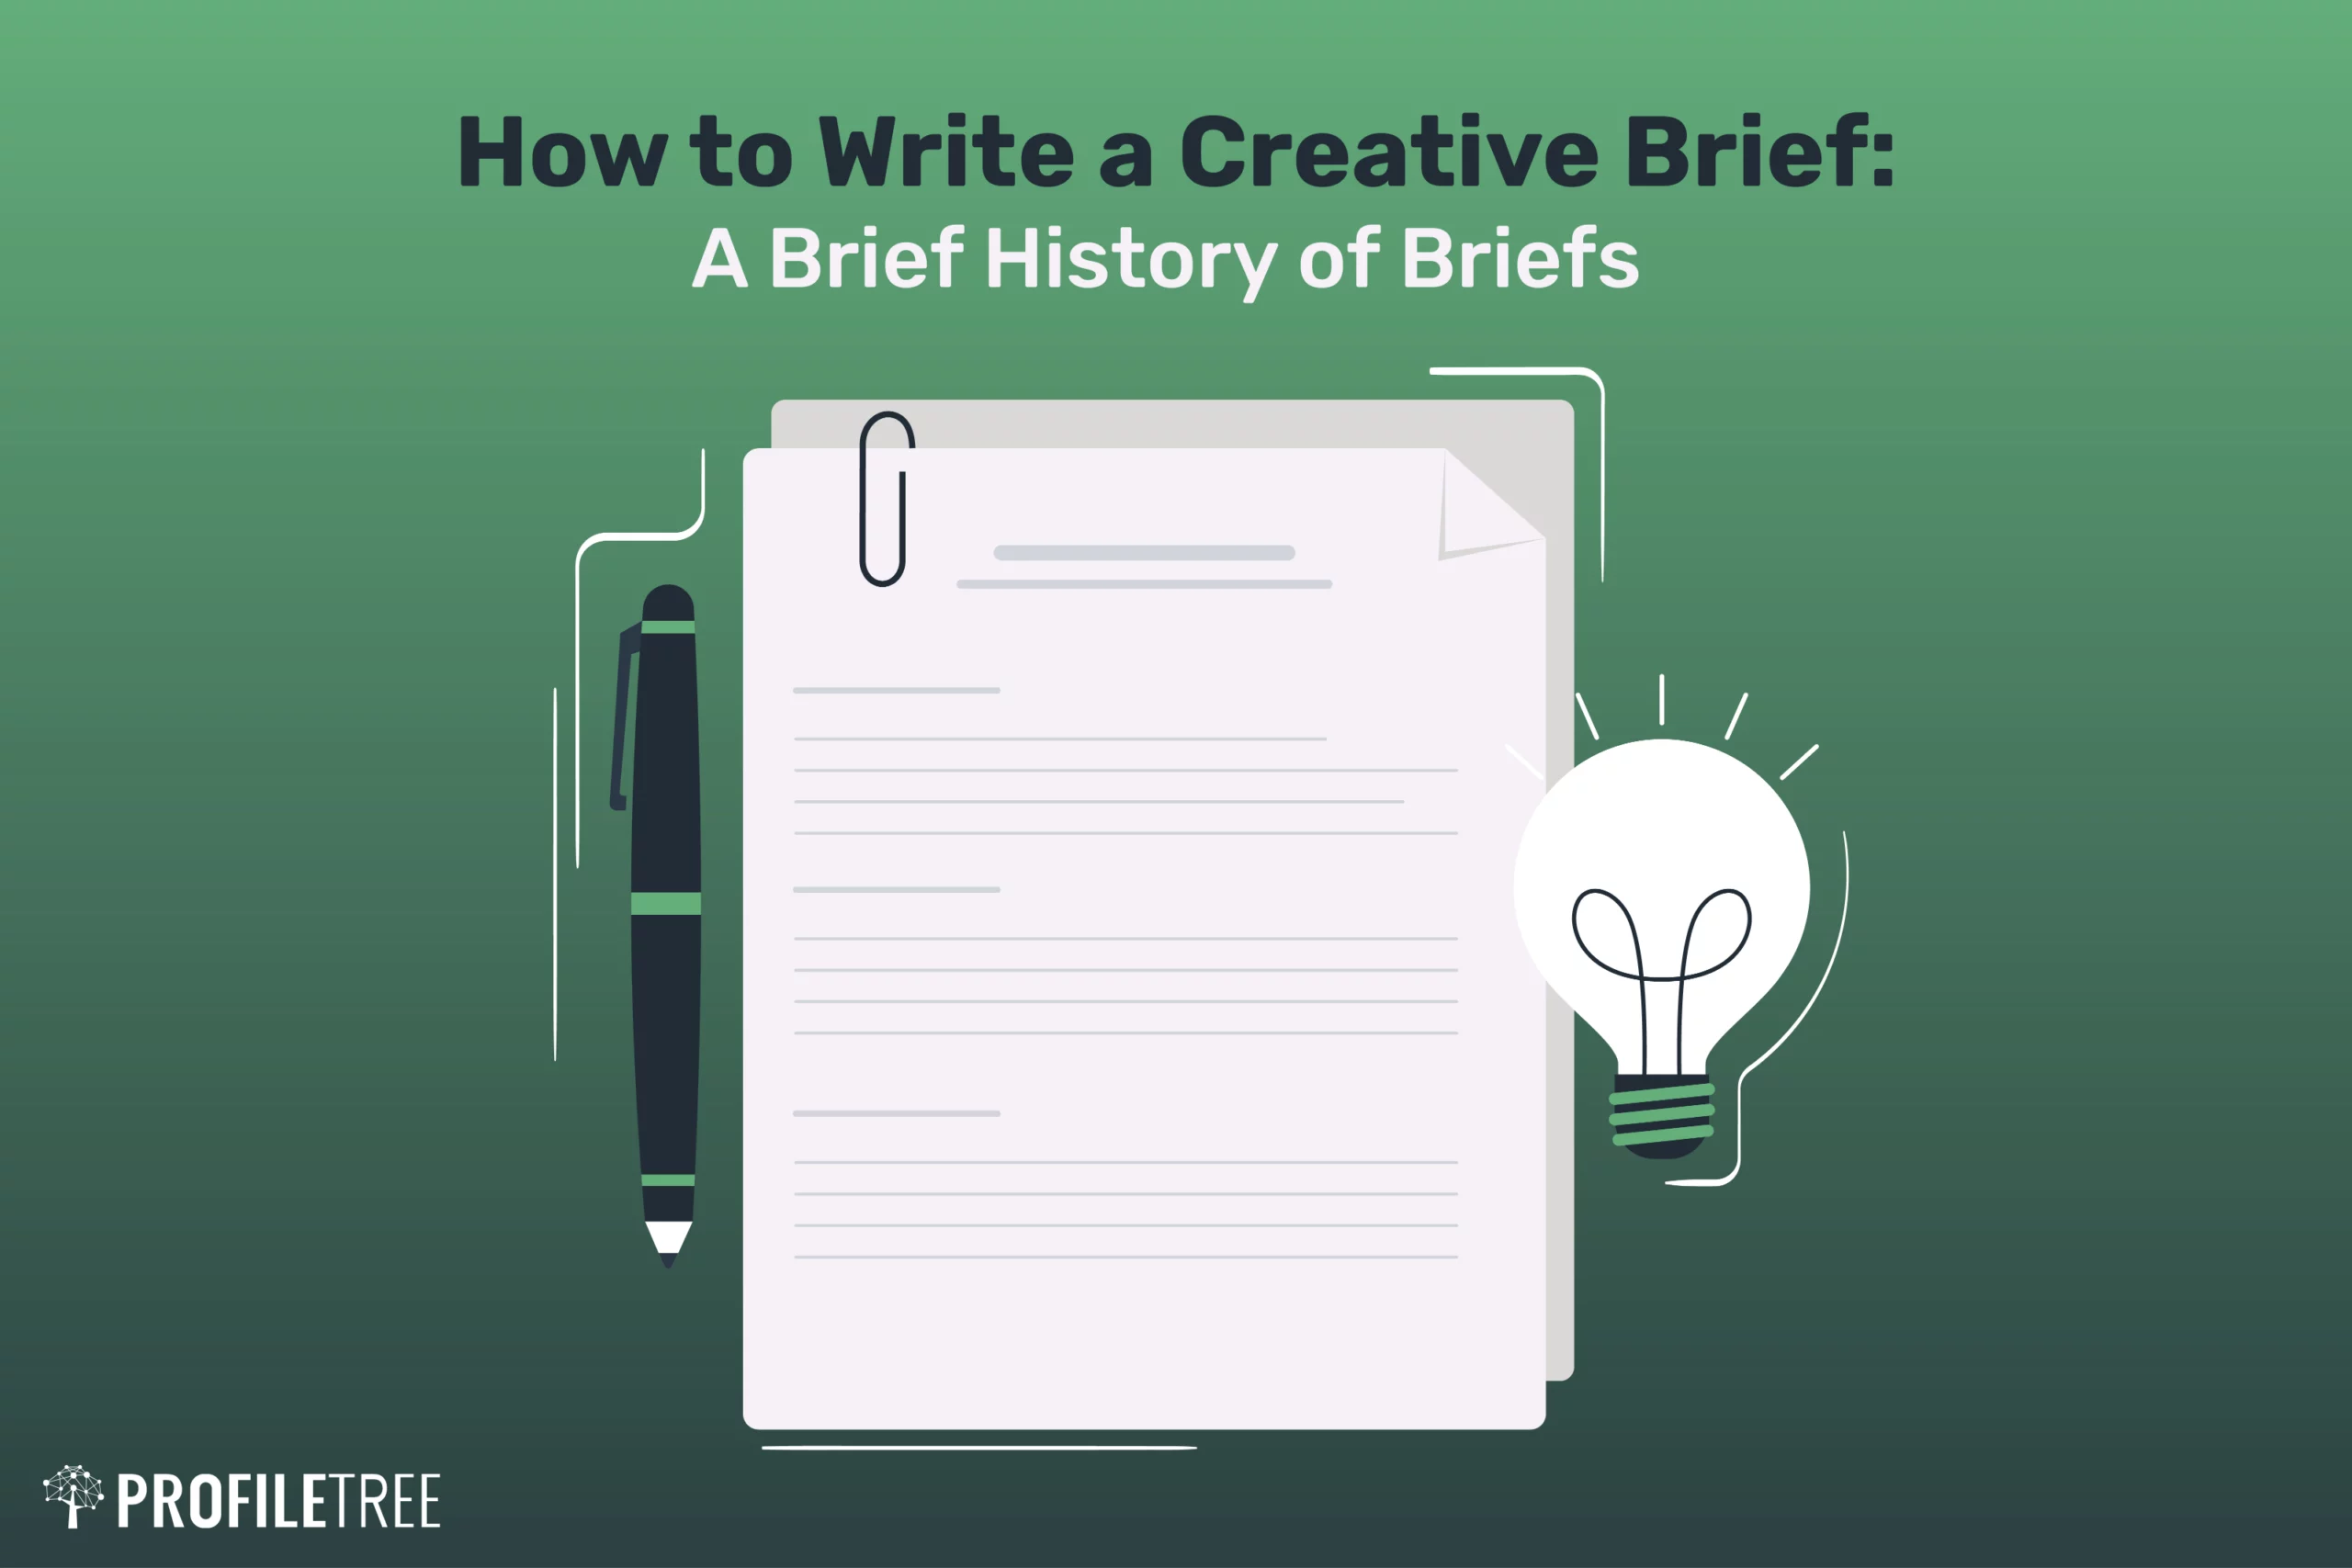 How to write a creative brief